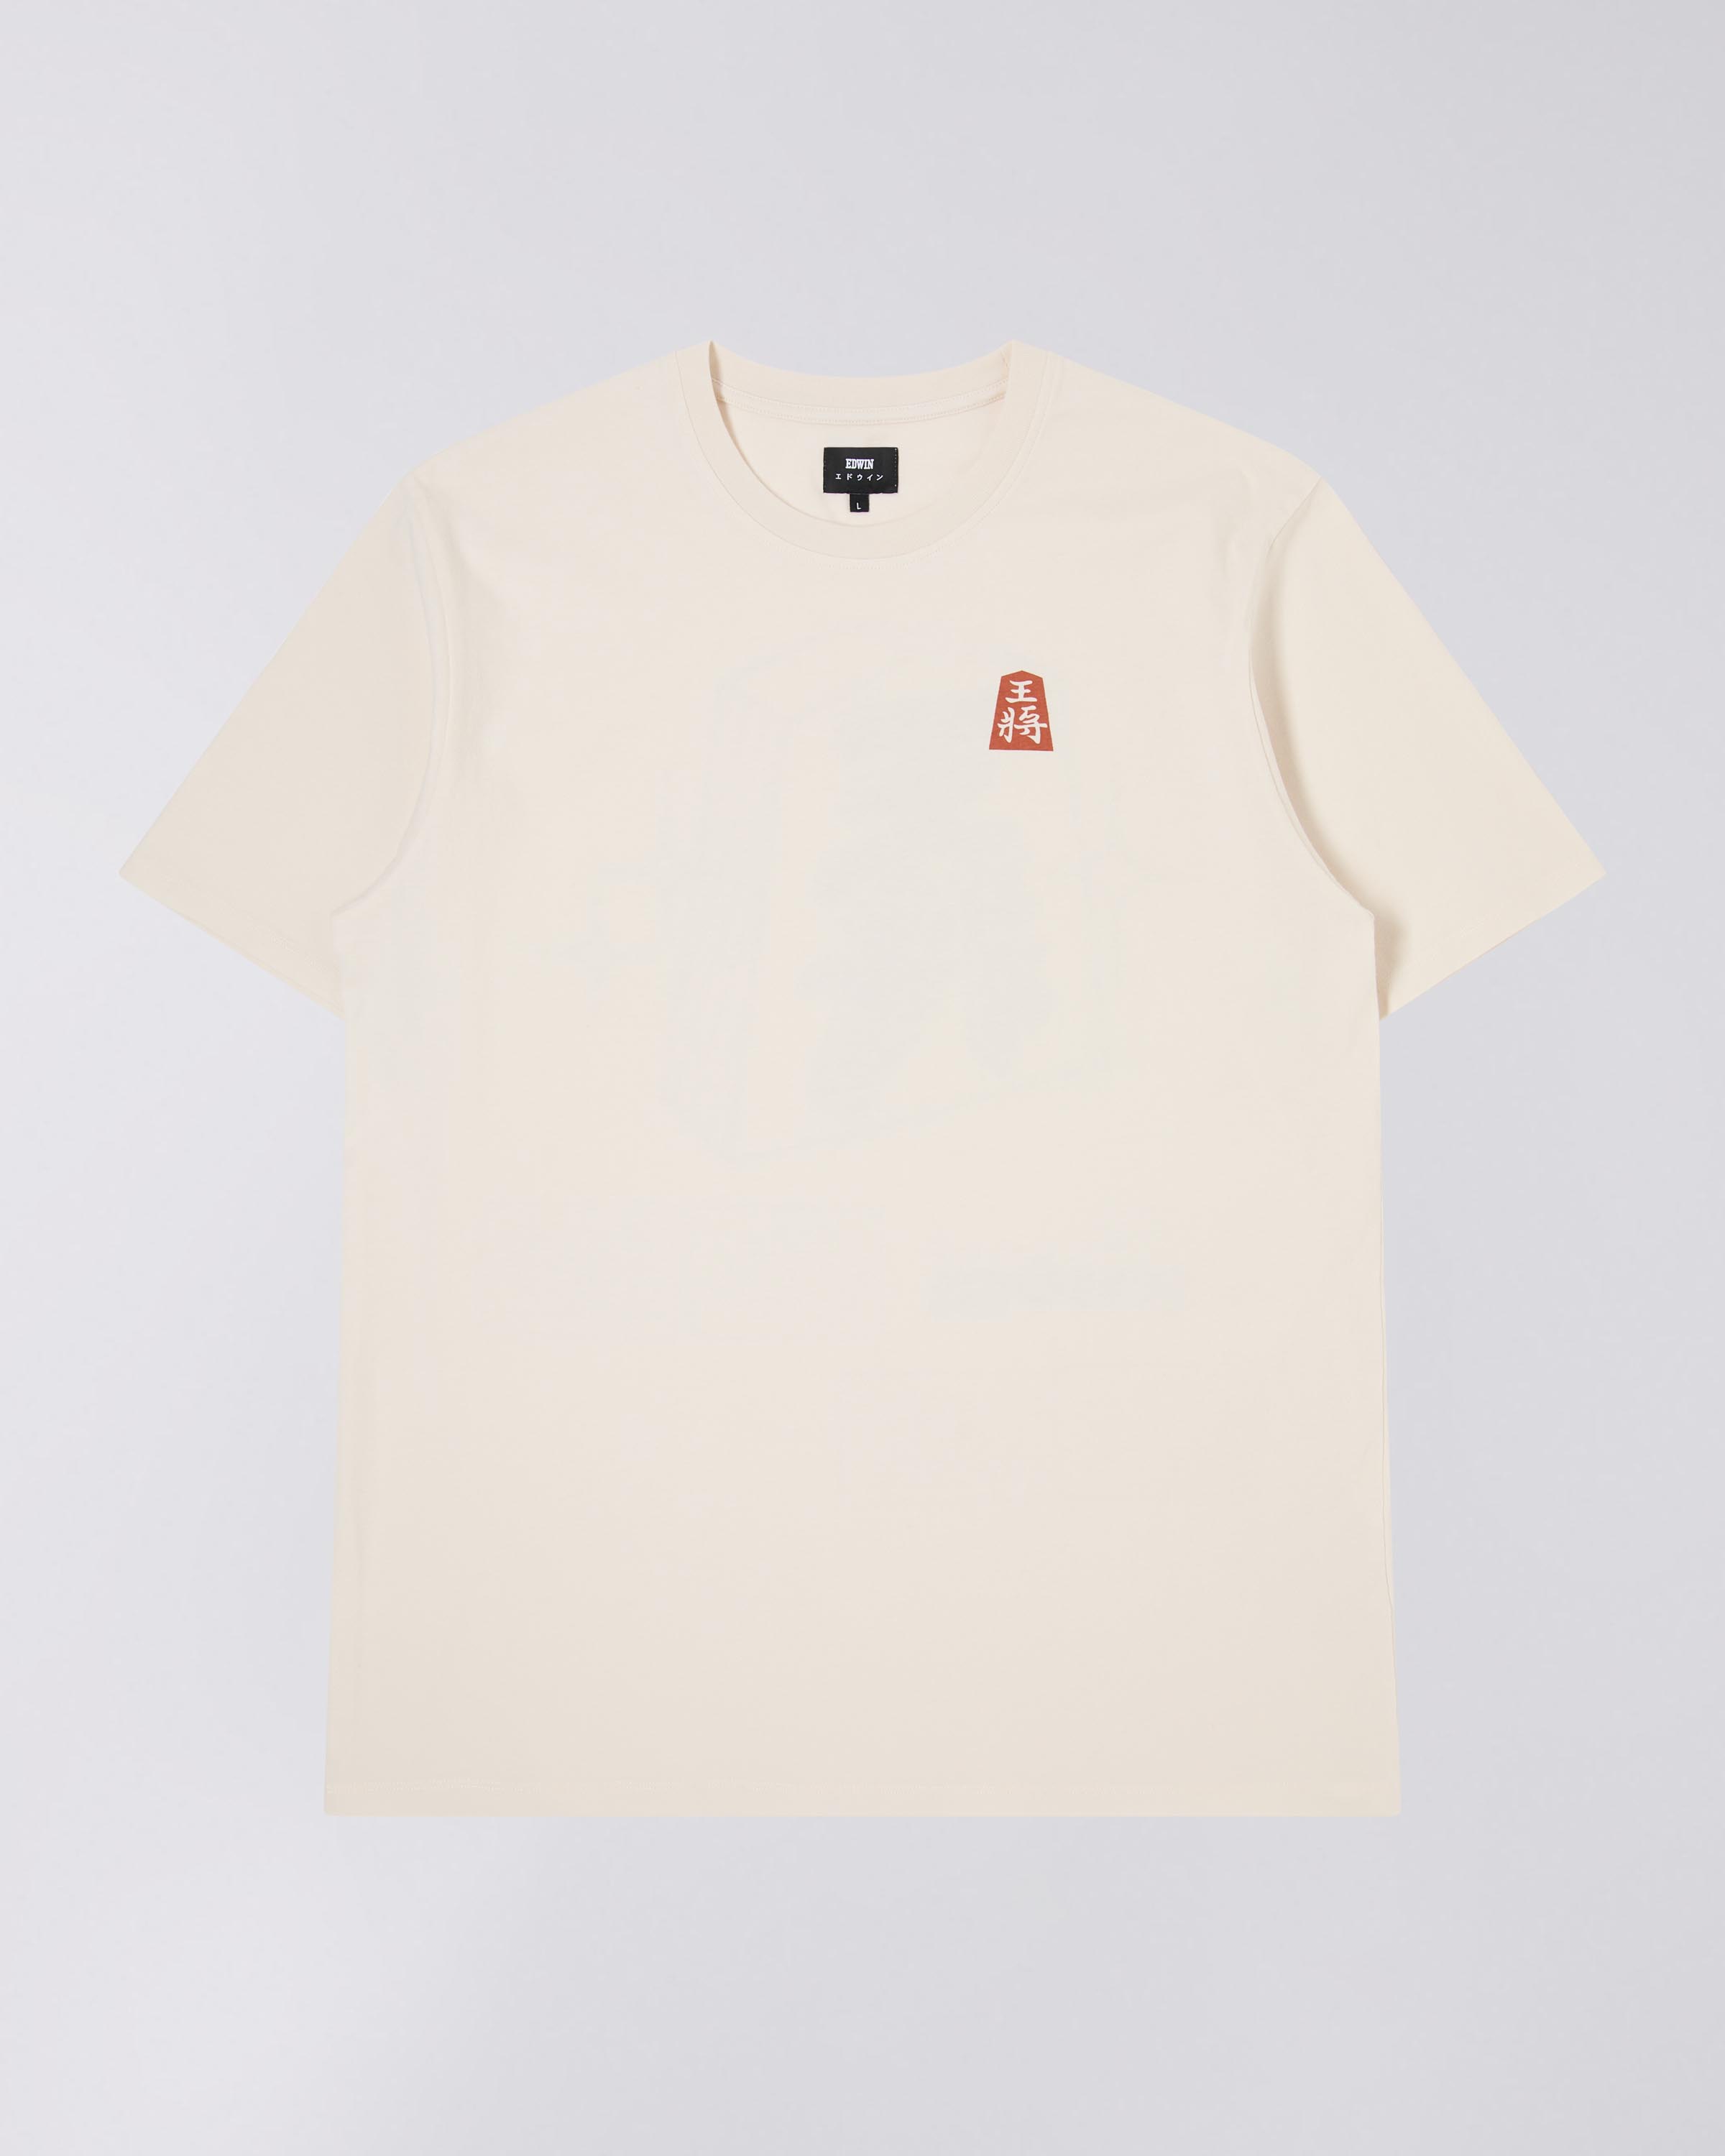 Shogi T-Shirt